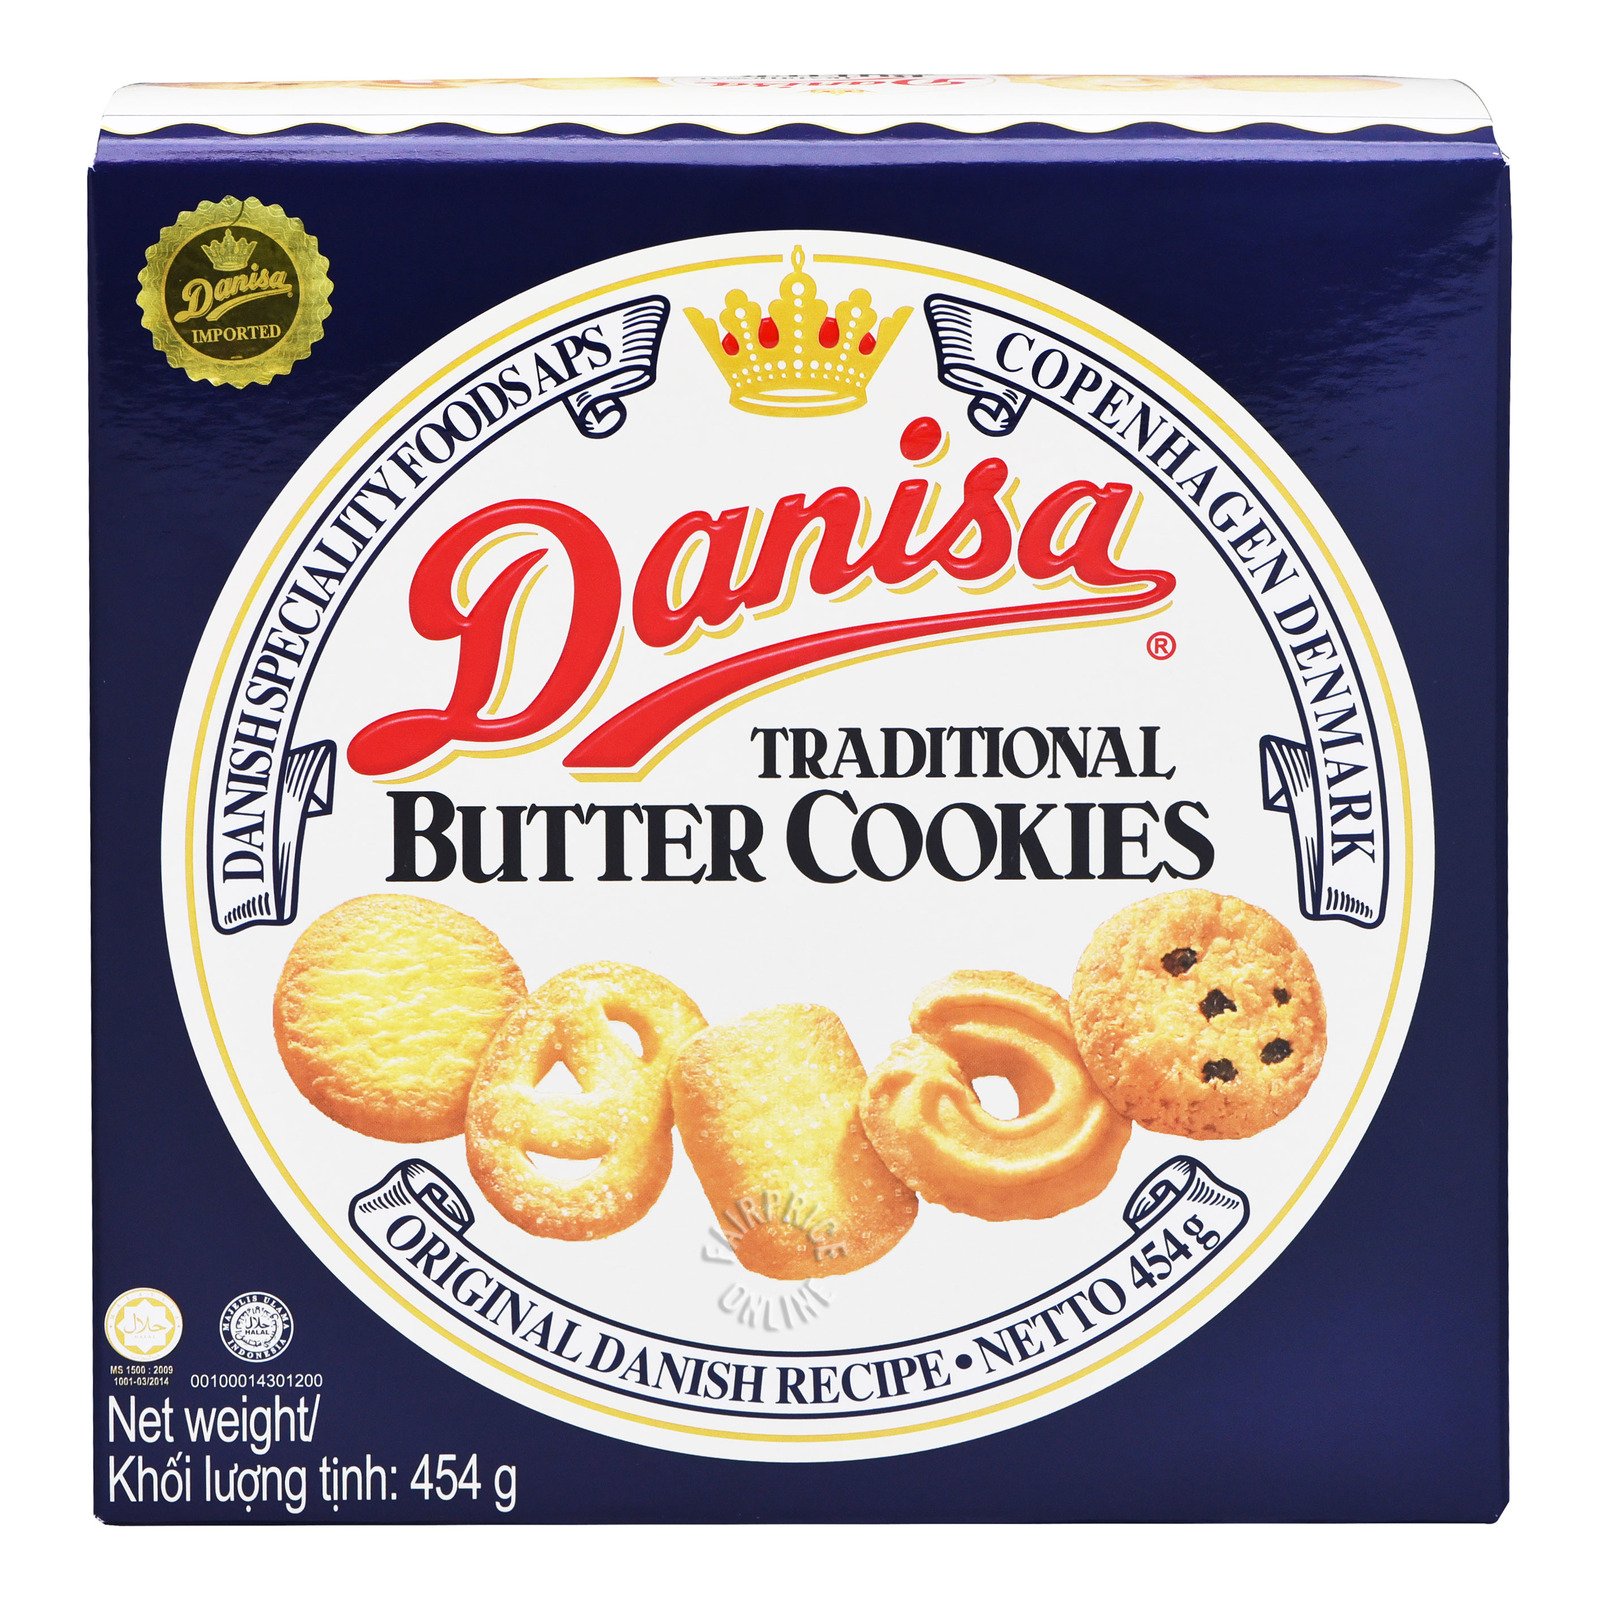 Butter cookies печенье. Danisa печенье. Печенье Даниса баттер кукис. Печенье английское Butter. Сдобное печенье купить